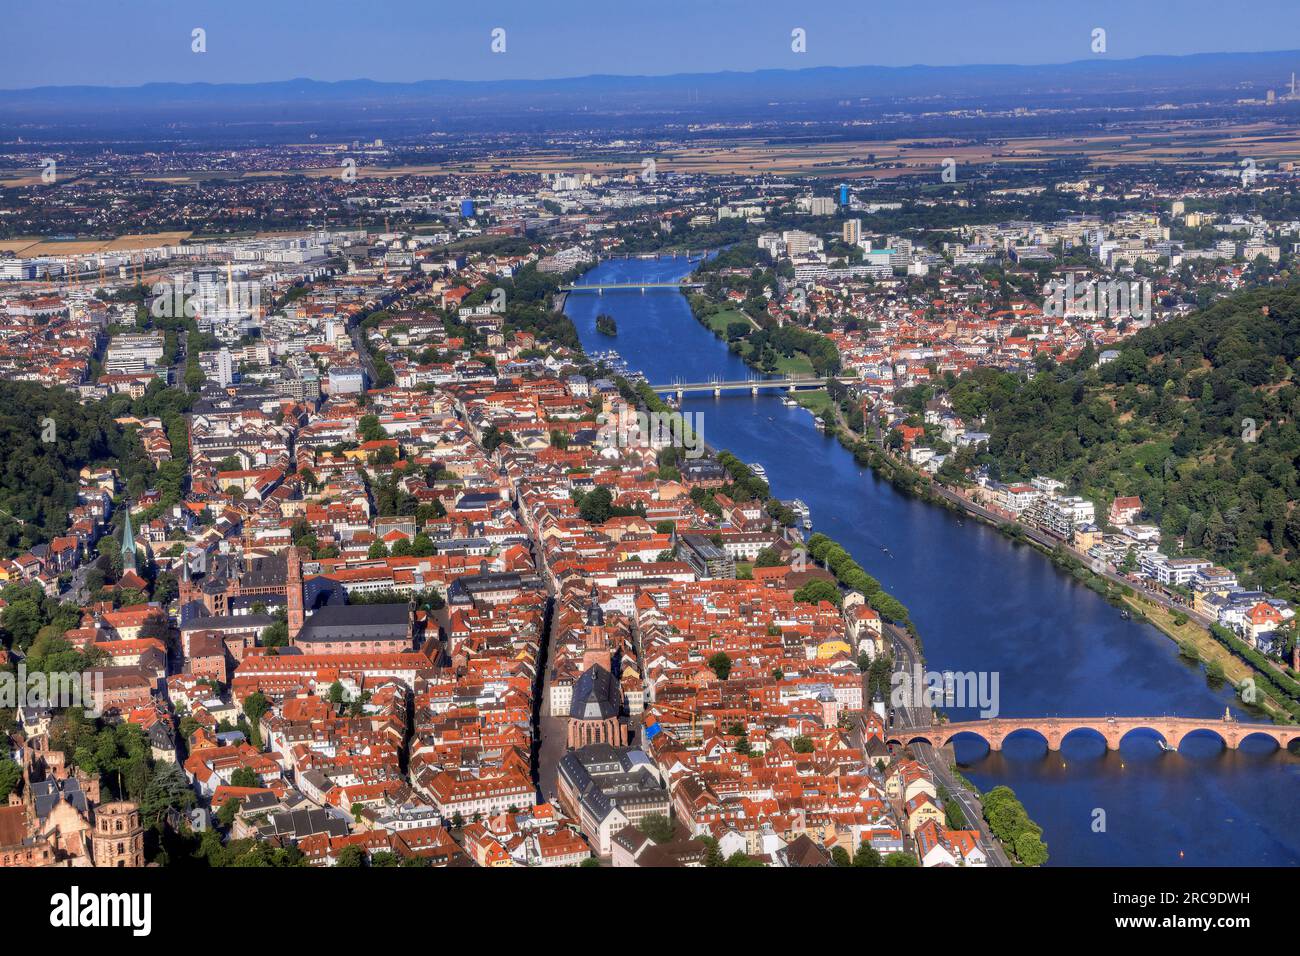 Luftaufnahme der Großstadt Heidelberg, UNESCO-Global-Geopark Bergstraße-Odenwald, Bade-Württemberg, Bergstraße, Odenwald, Süddeutschland, Deutschland Banque D'Images